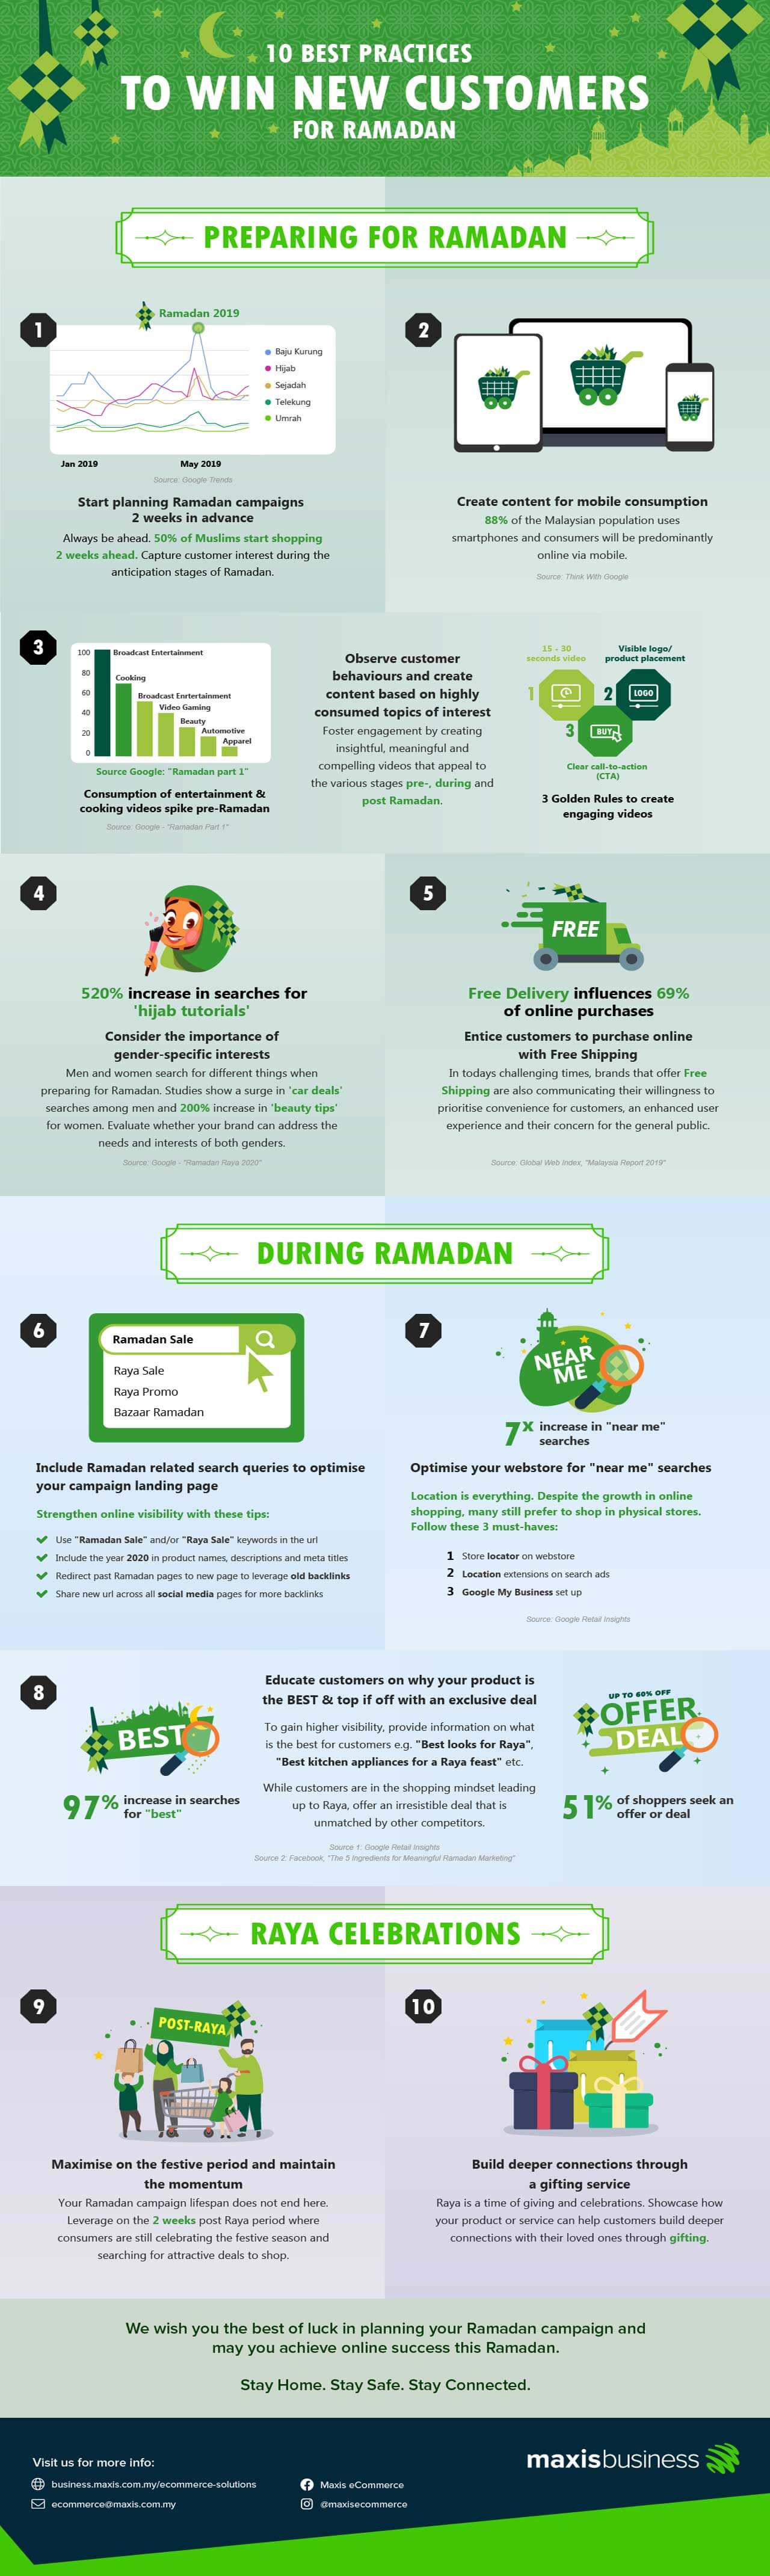 Ramadhan 2020 Infographic